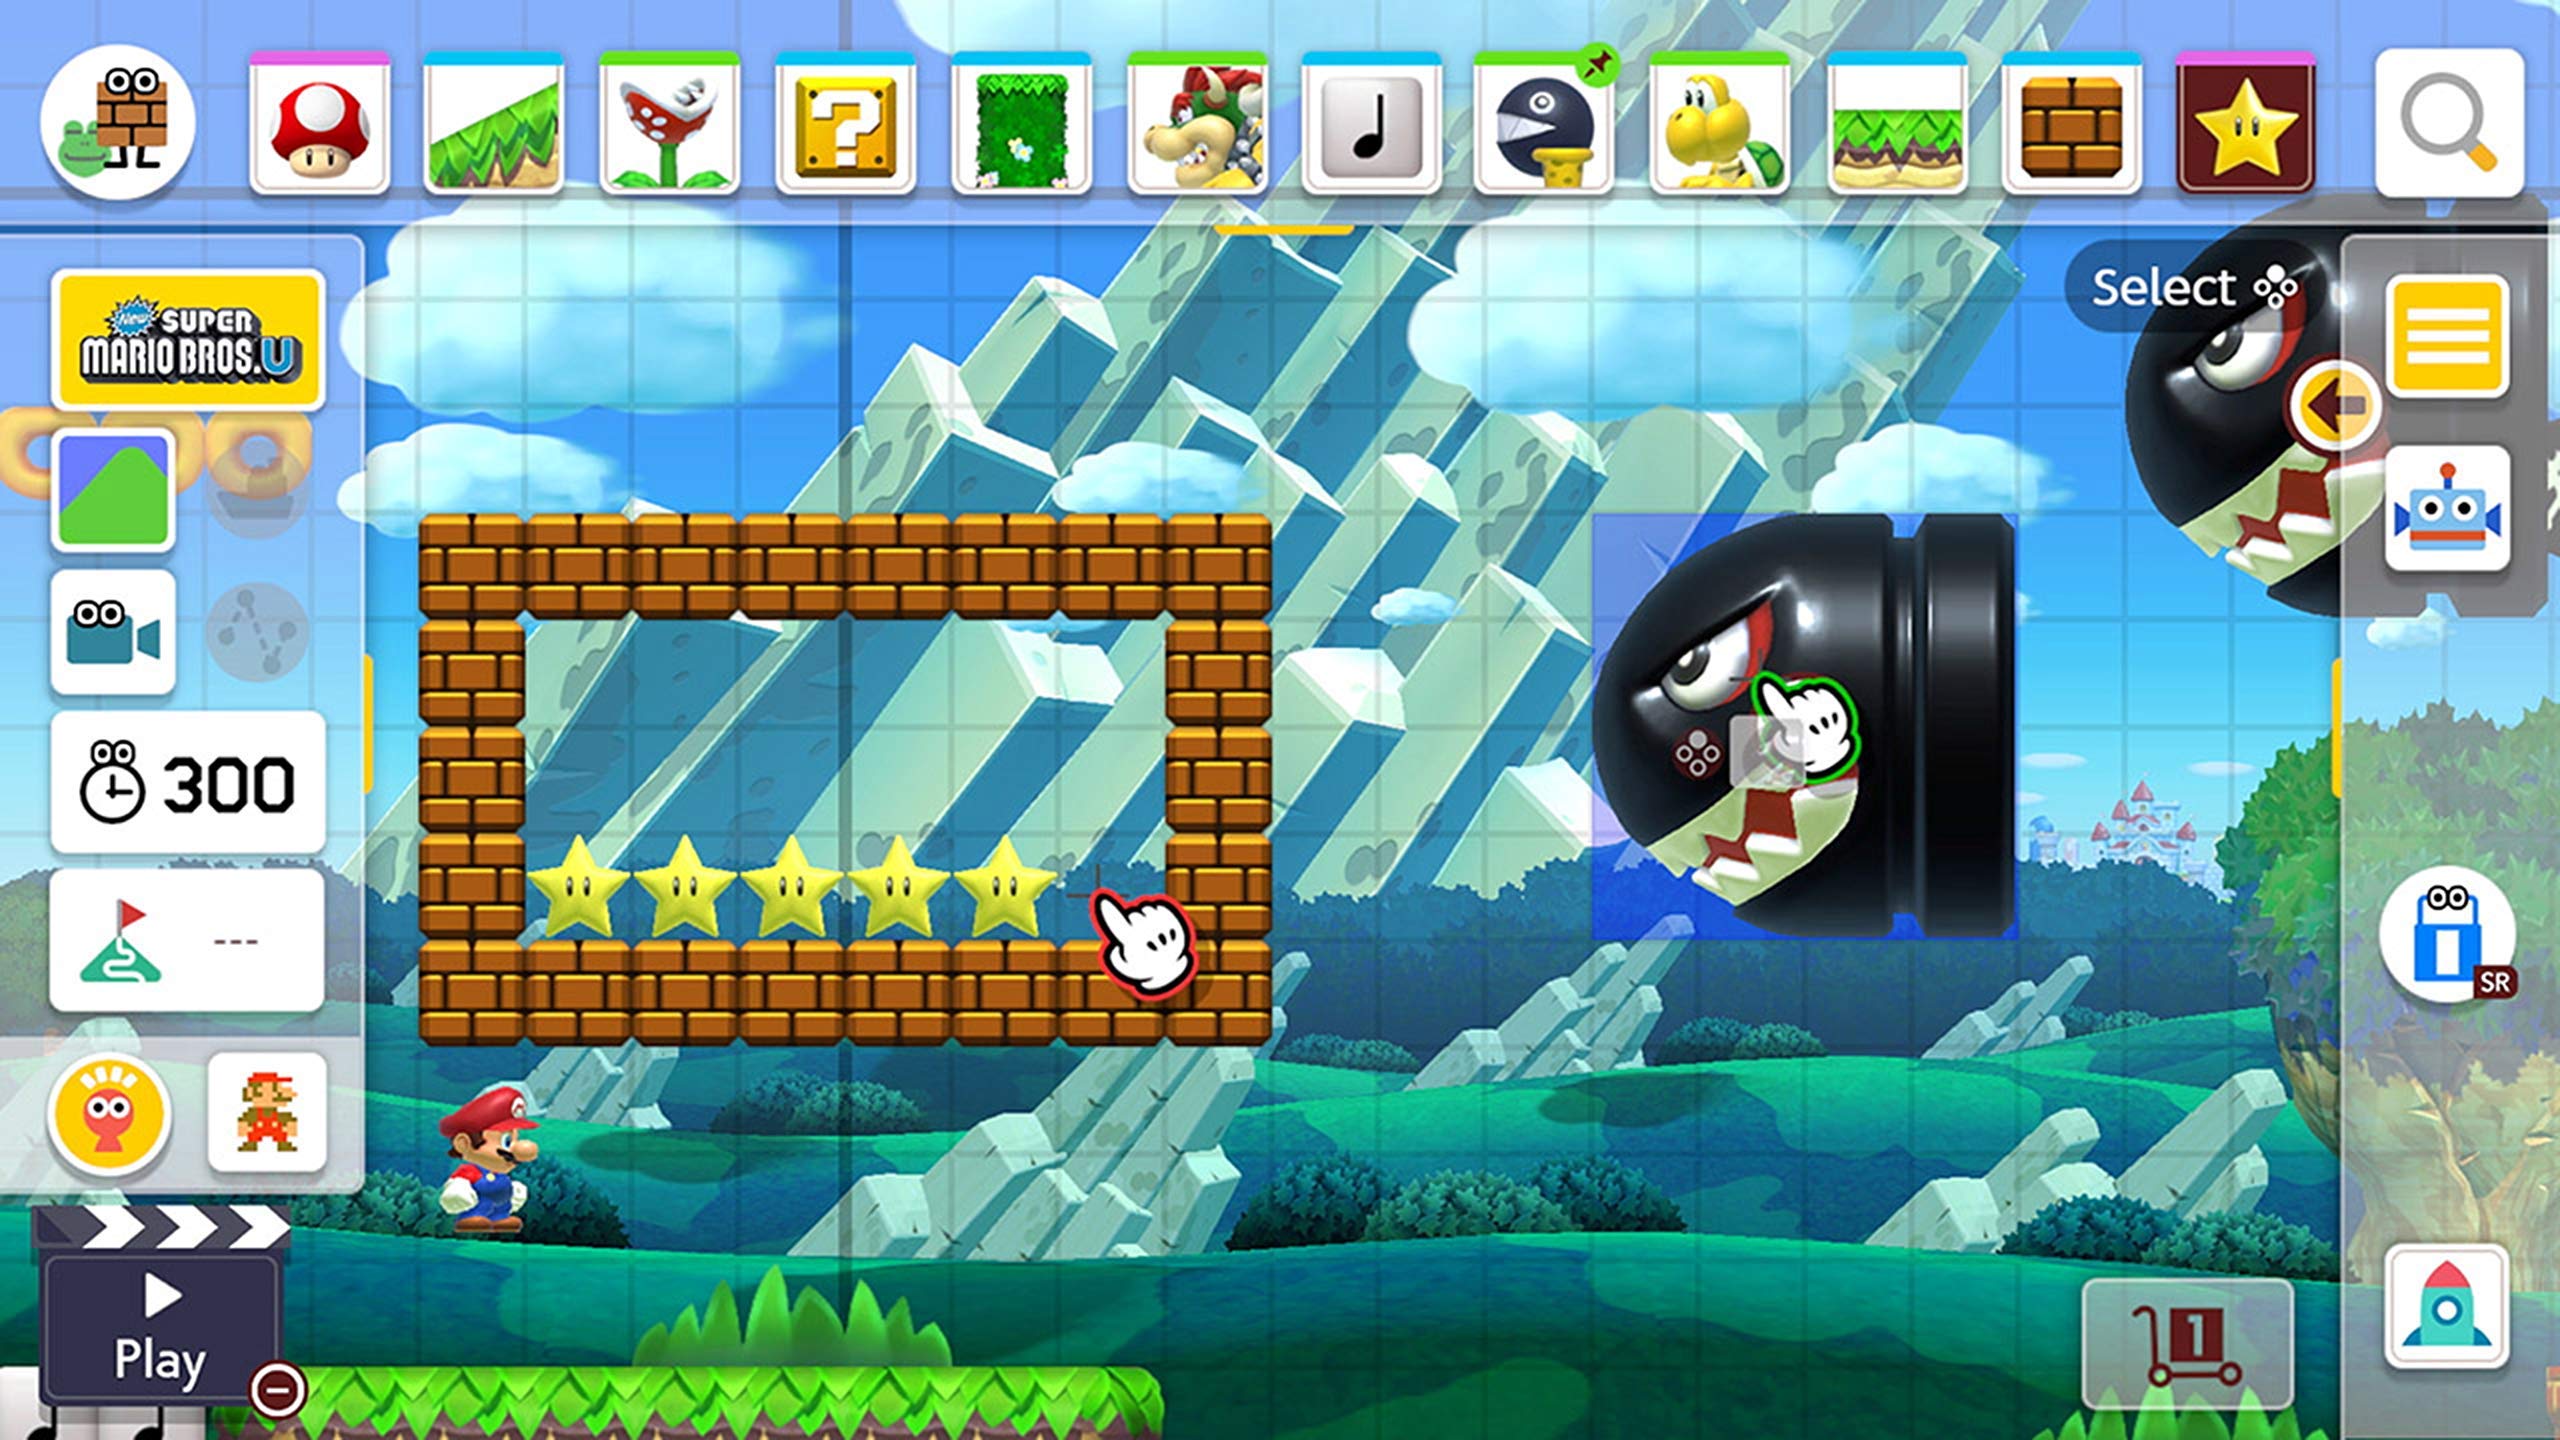 Super Mario Maker 2 - US Version